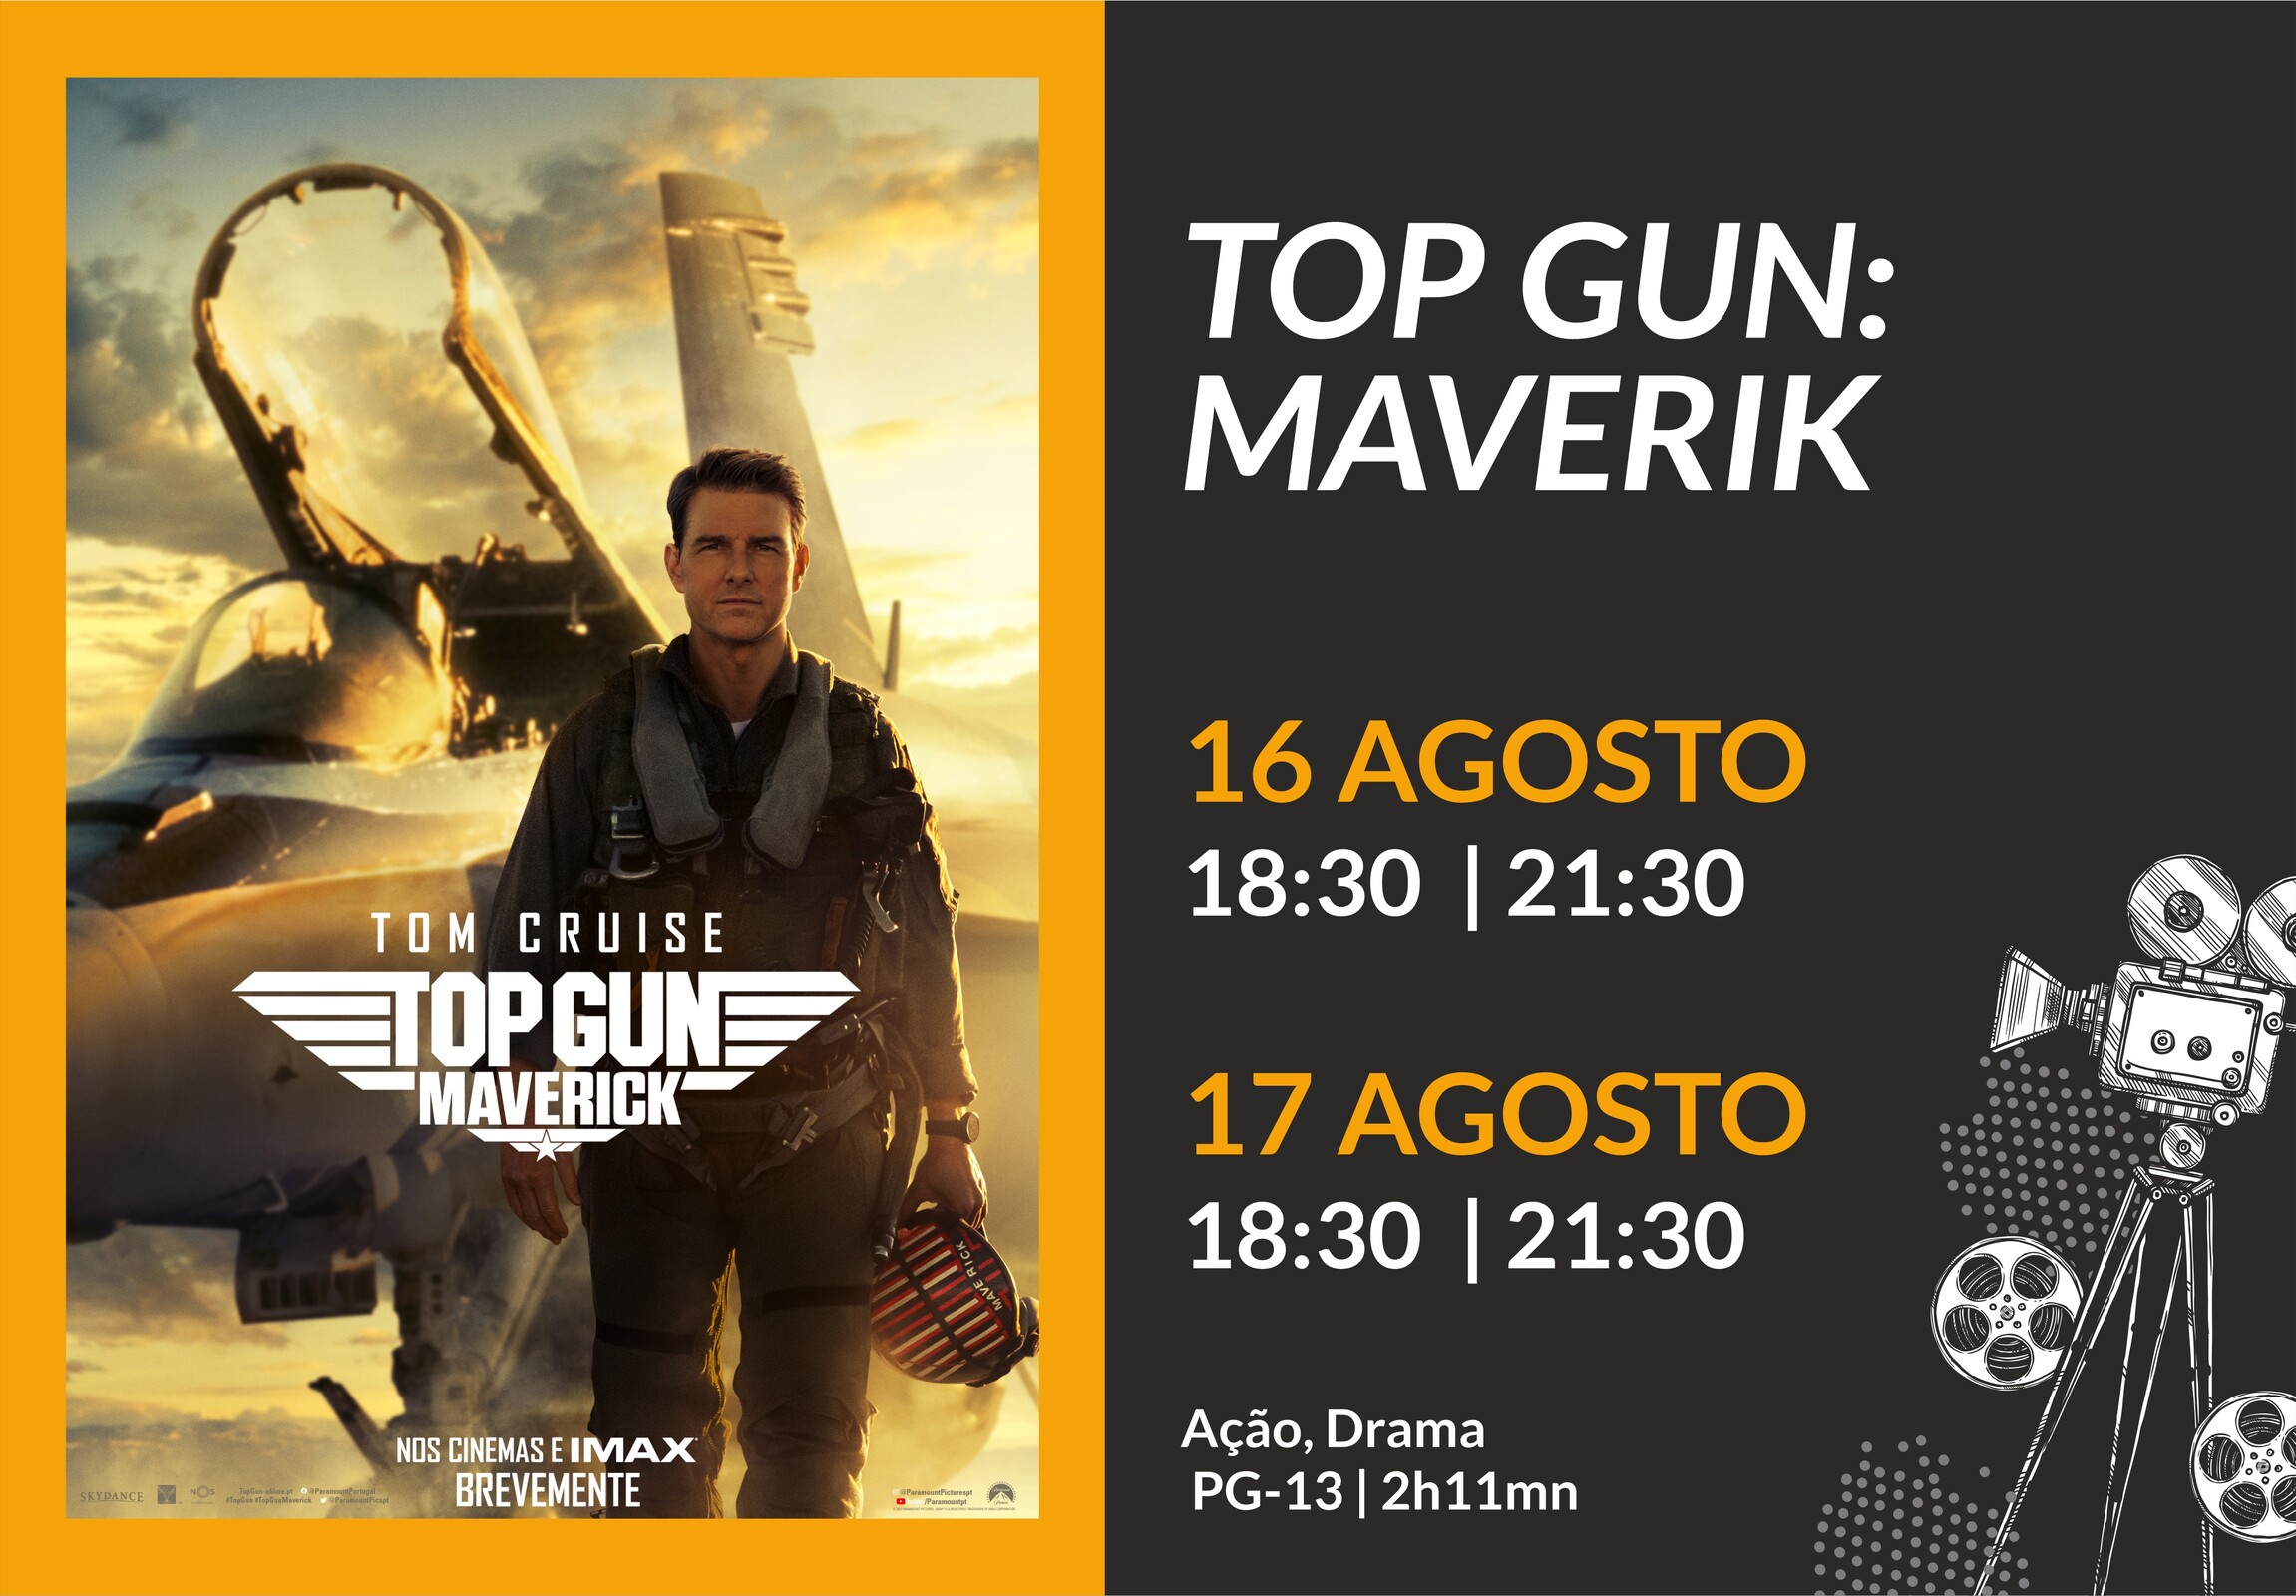  Top Gun: Maverick - Cinema Ação